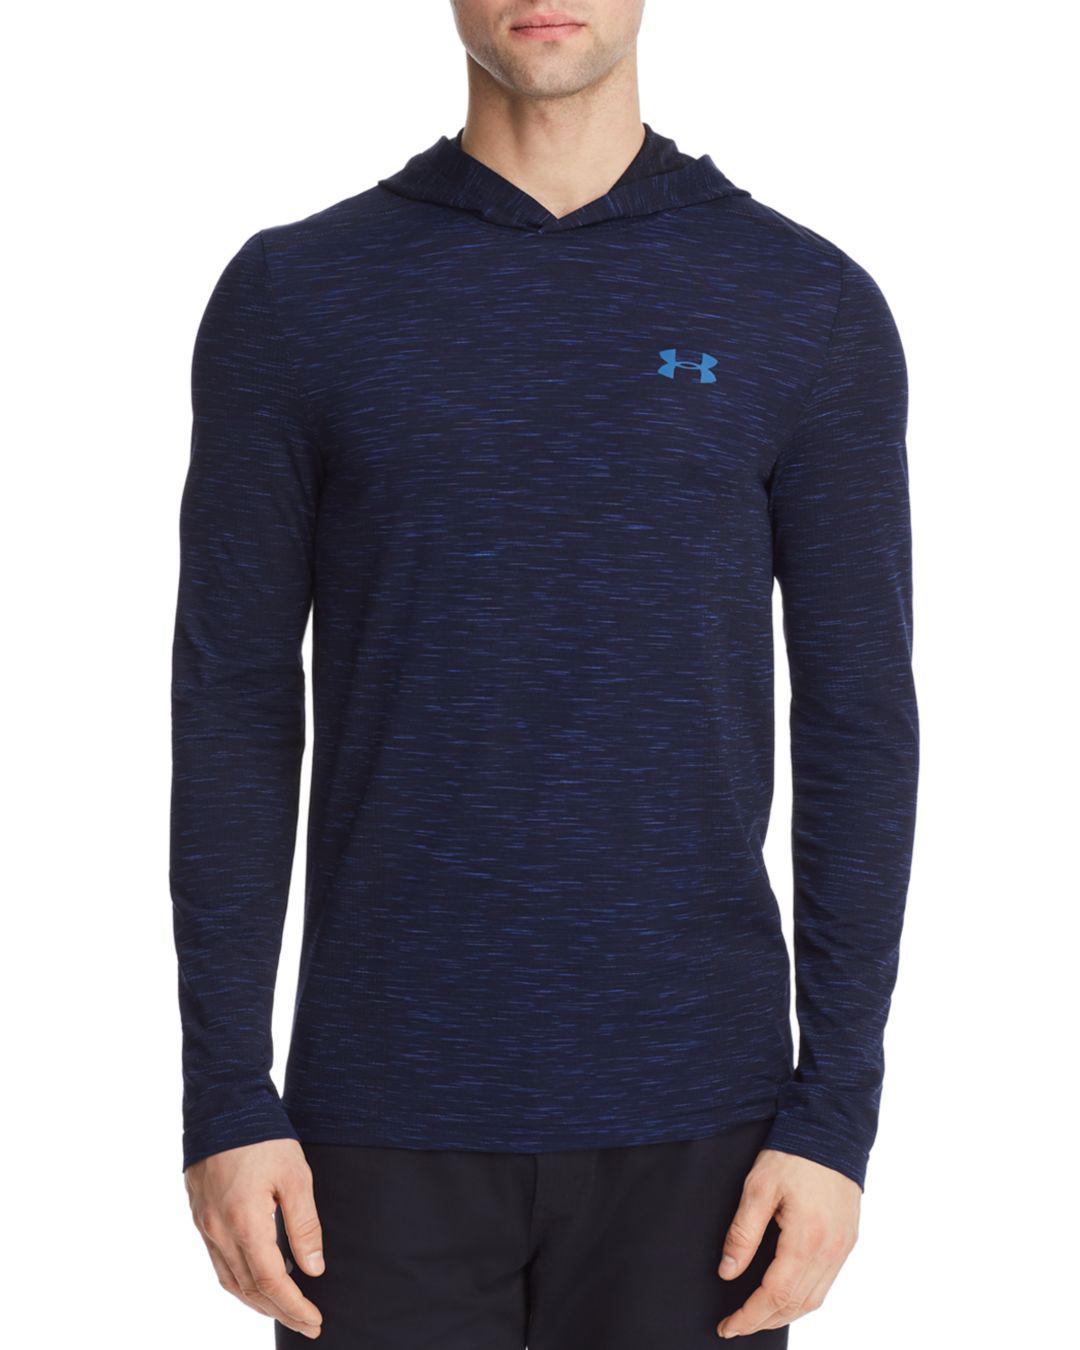 Lyst - Under Armour Threadborne Seamless Hooded Sweatshirt in Blue for Men